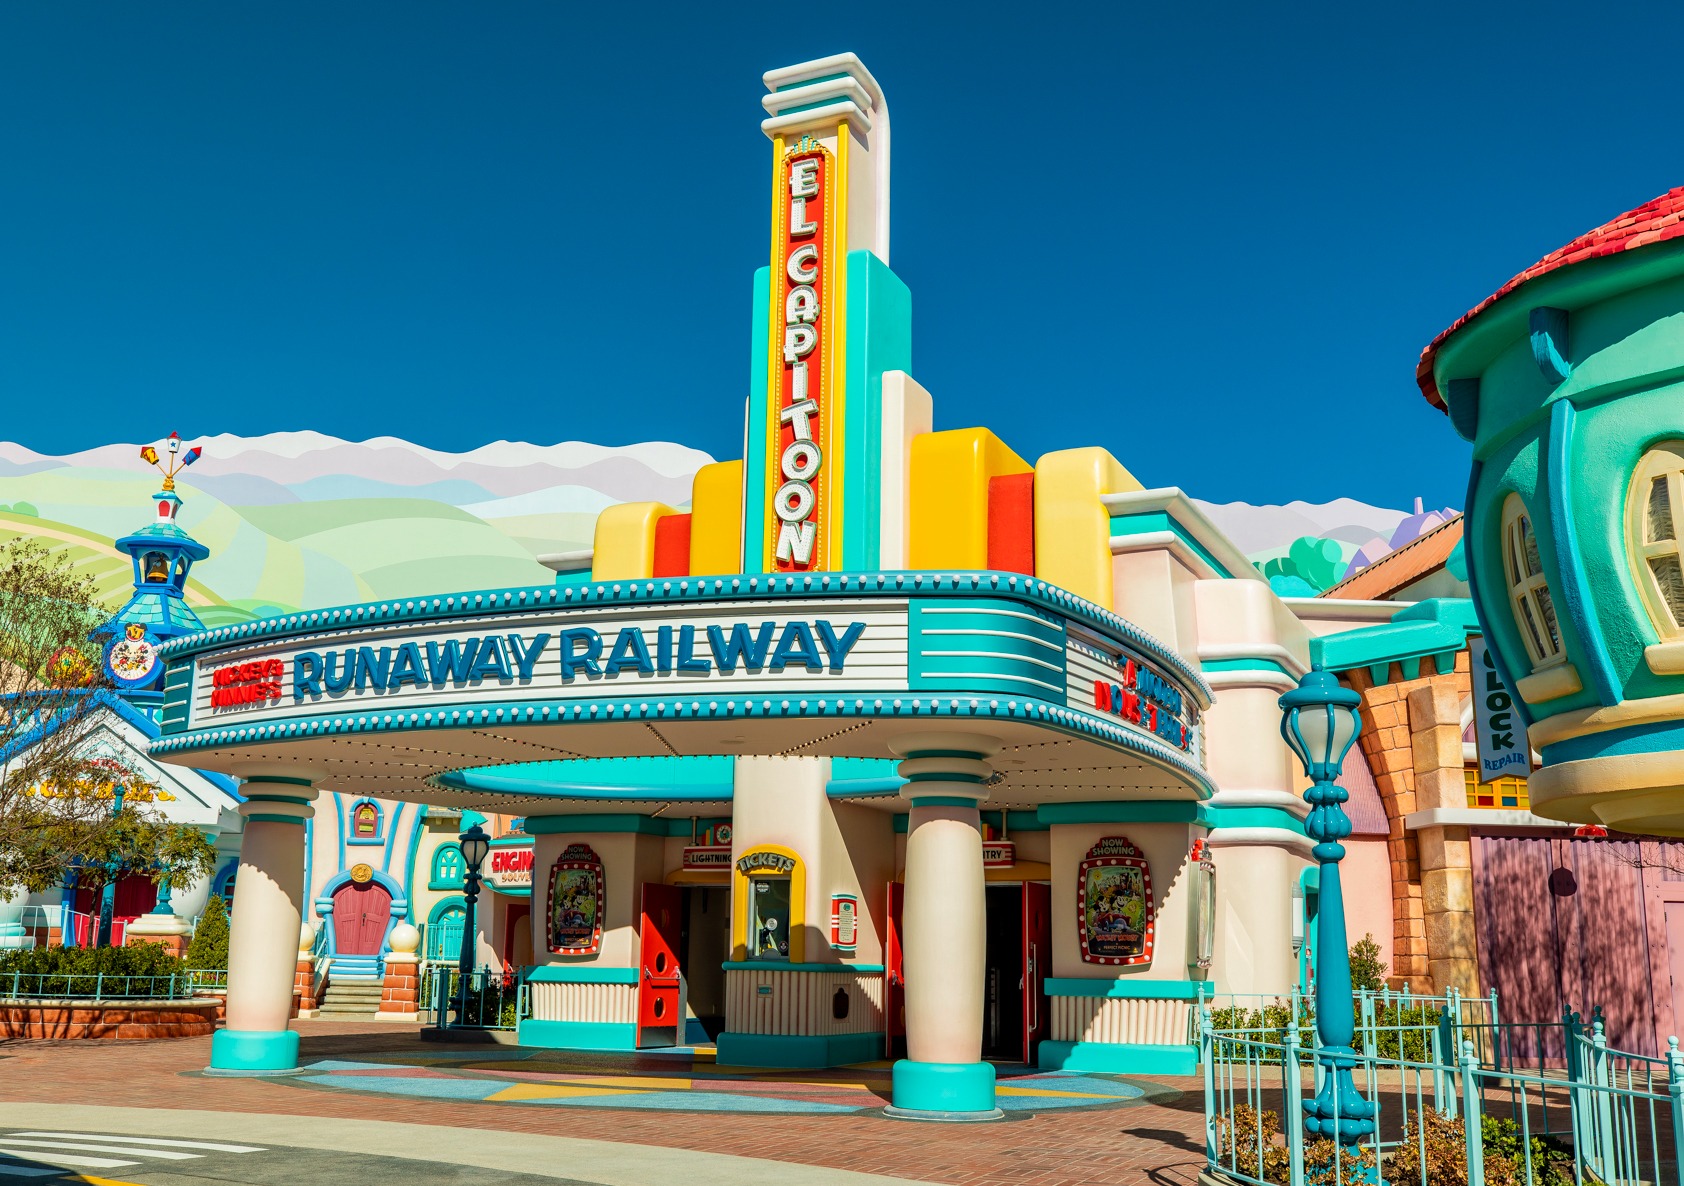 Mickey and Minnie’s Runaway Railway